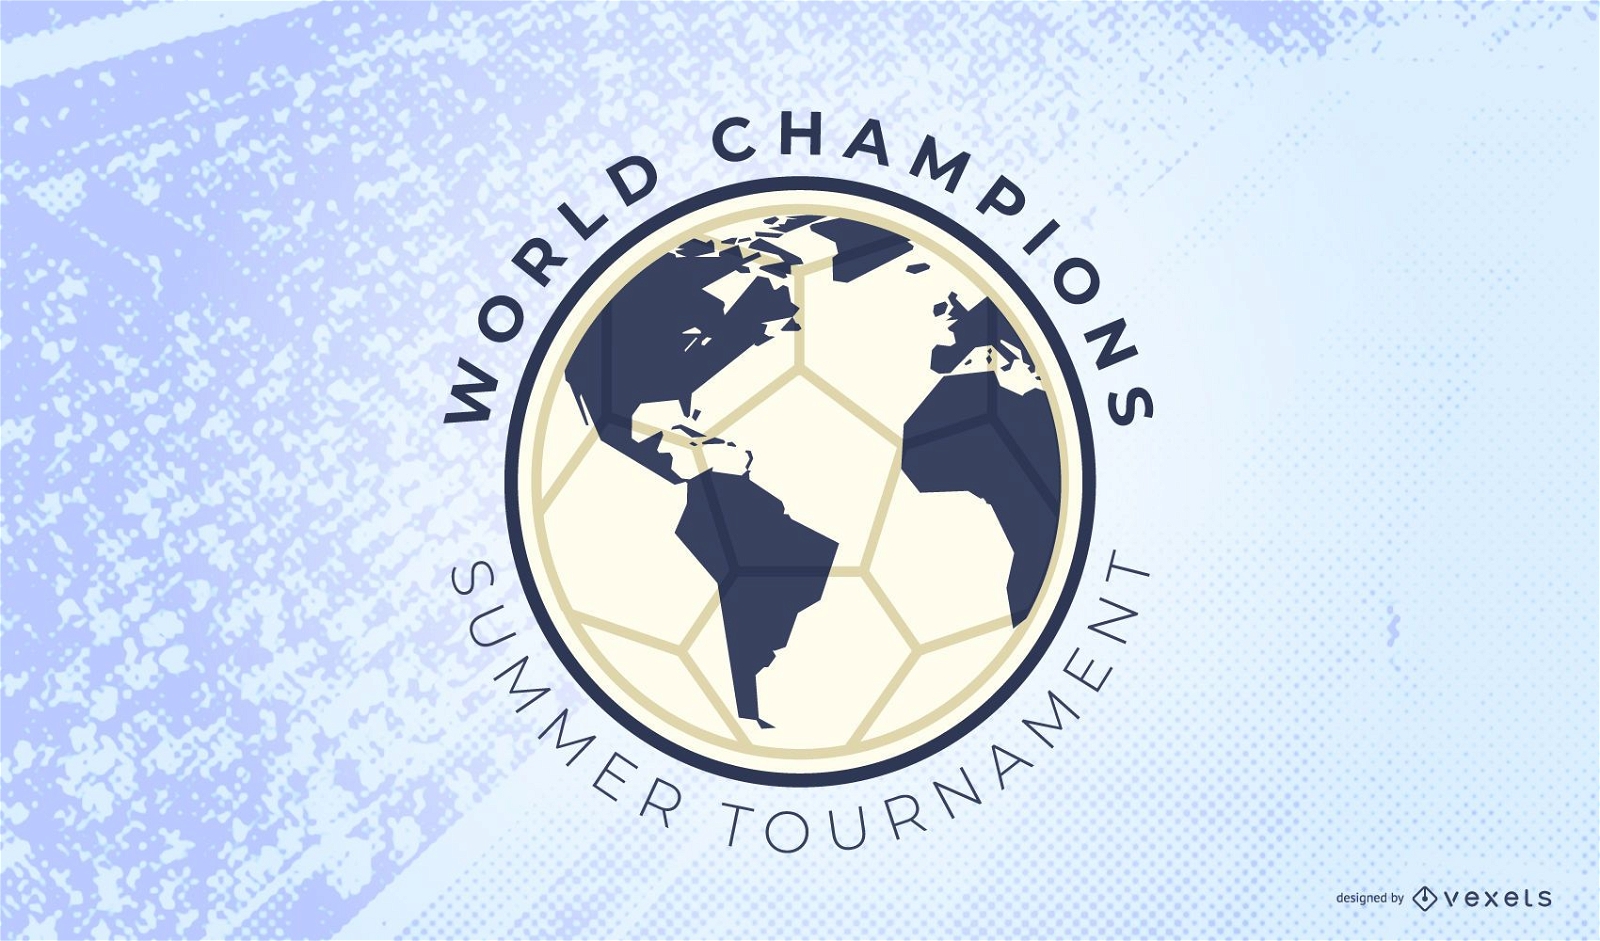 Soccer tournament logo template